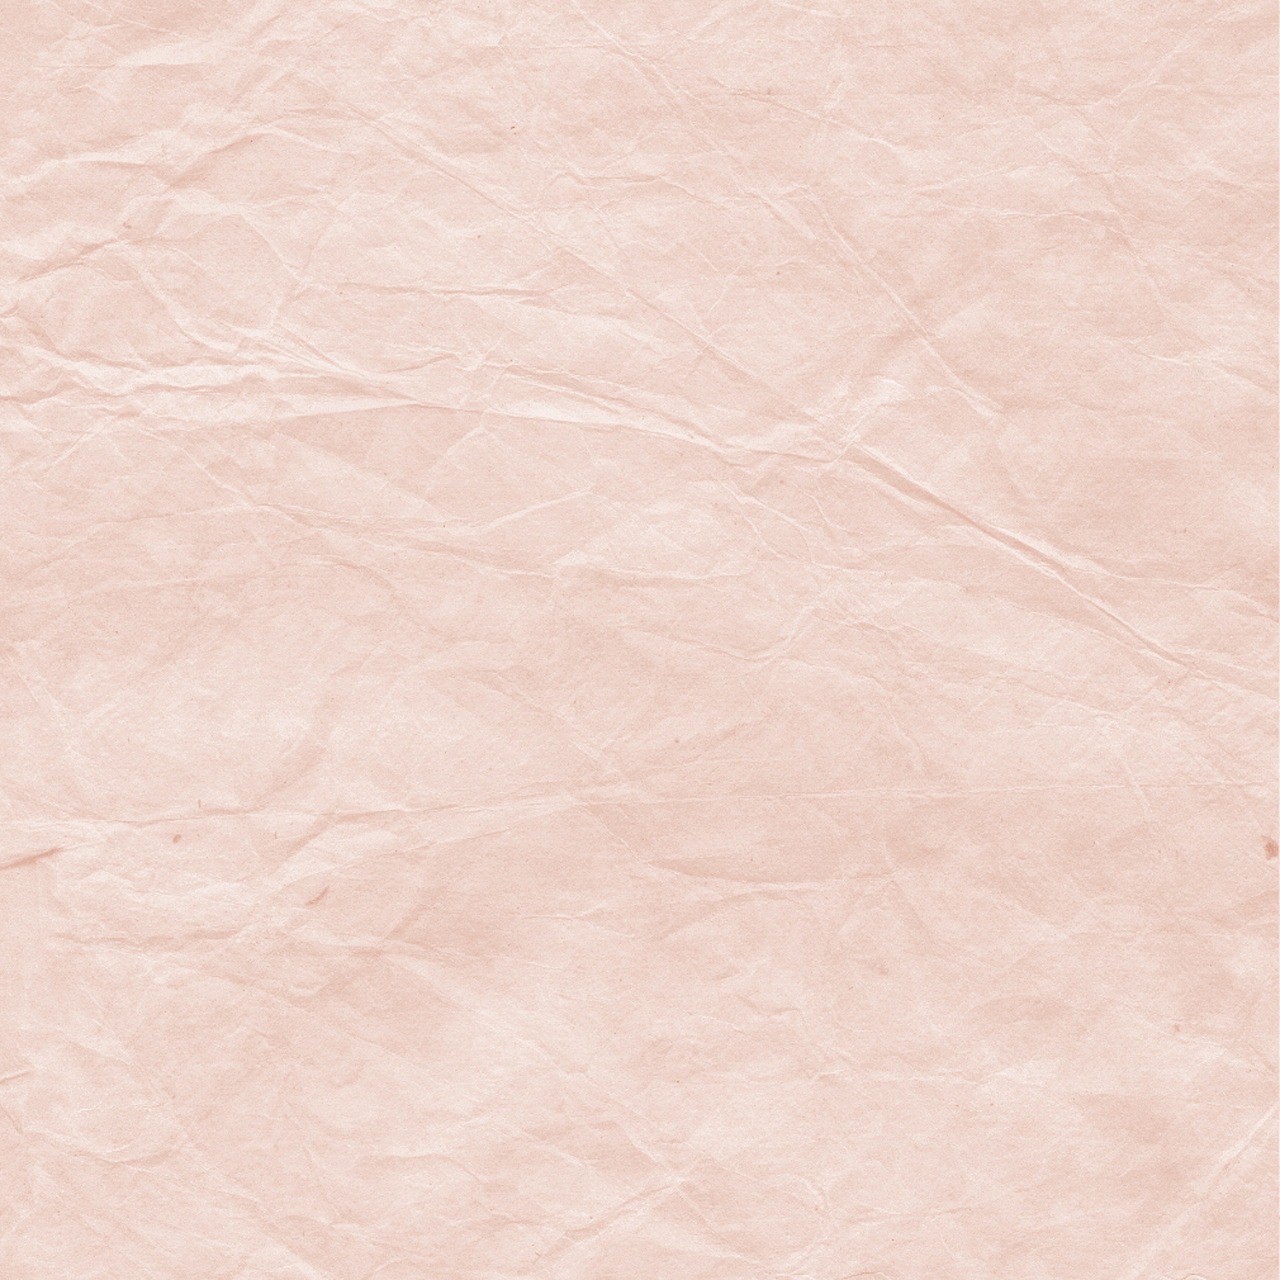 Free Pink Parchment Paper Texture Photos and Vectors